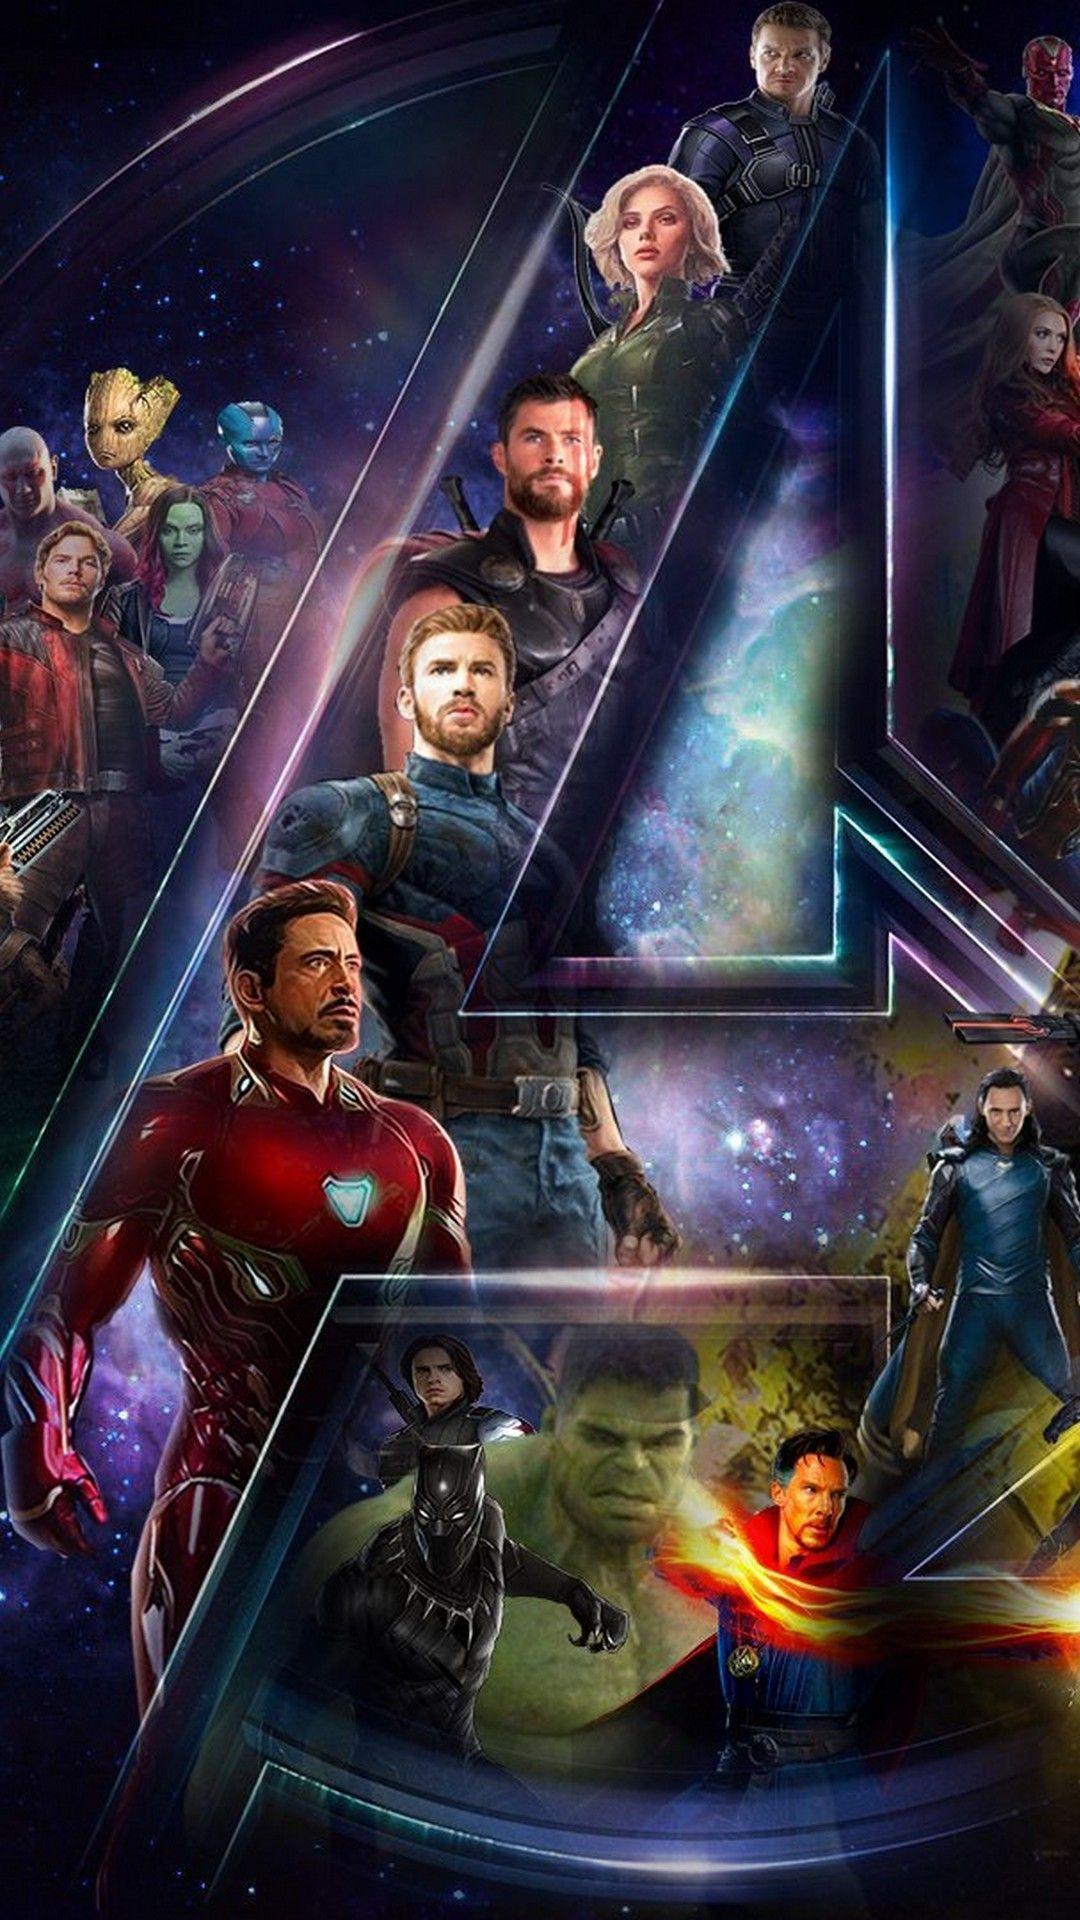 Avengers Endgame Superheroes Wallpaper HD 2019 for Android